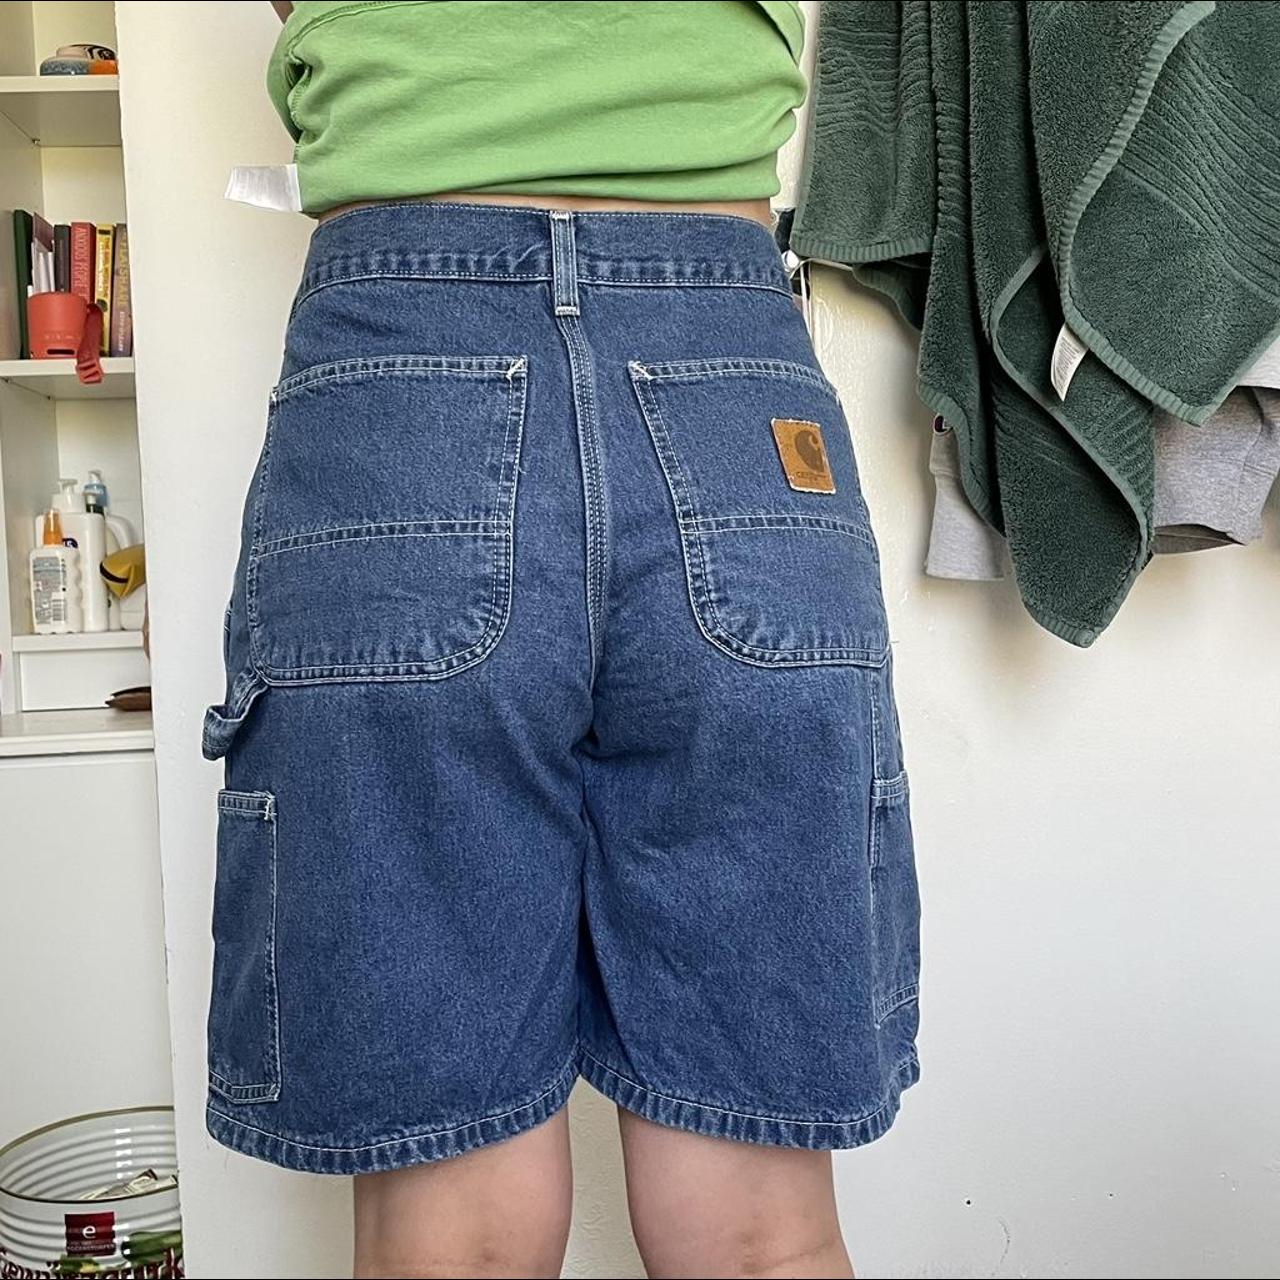 Carhartt Men's Shorts | Depop